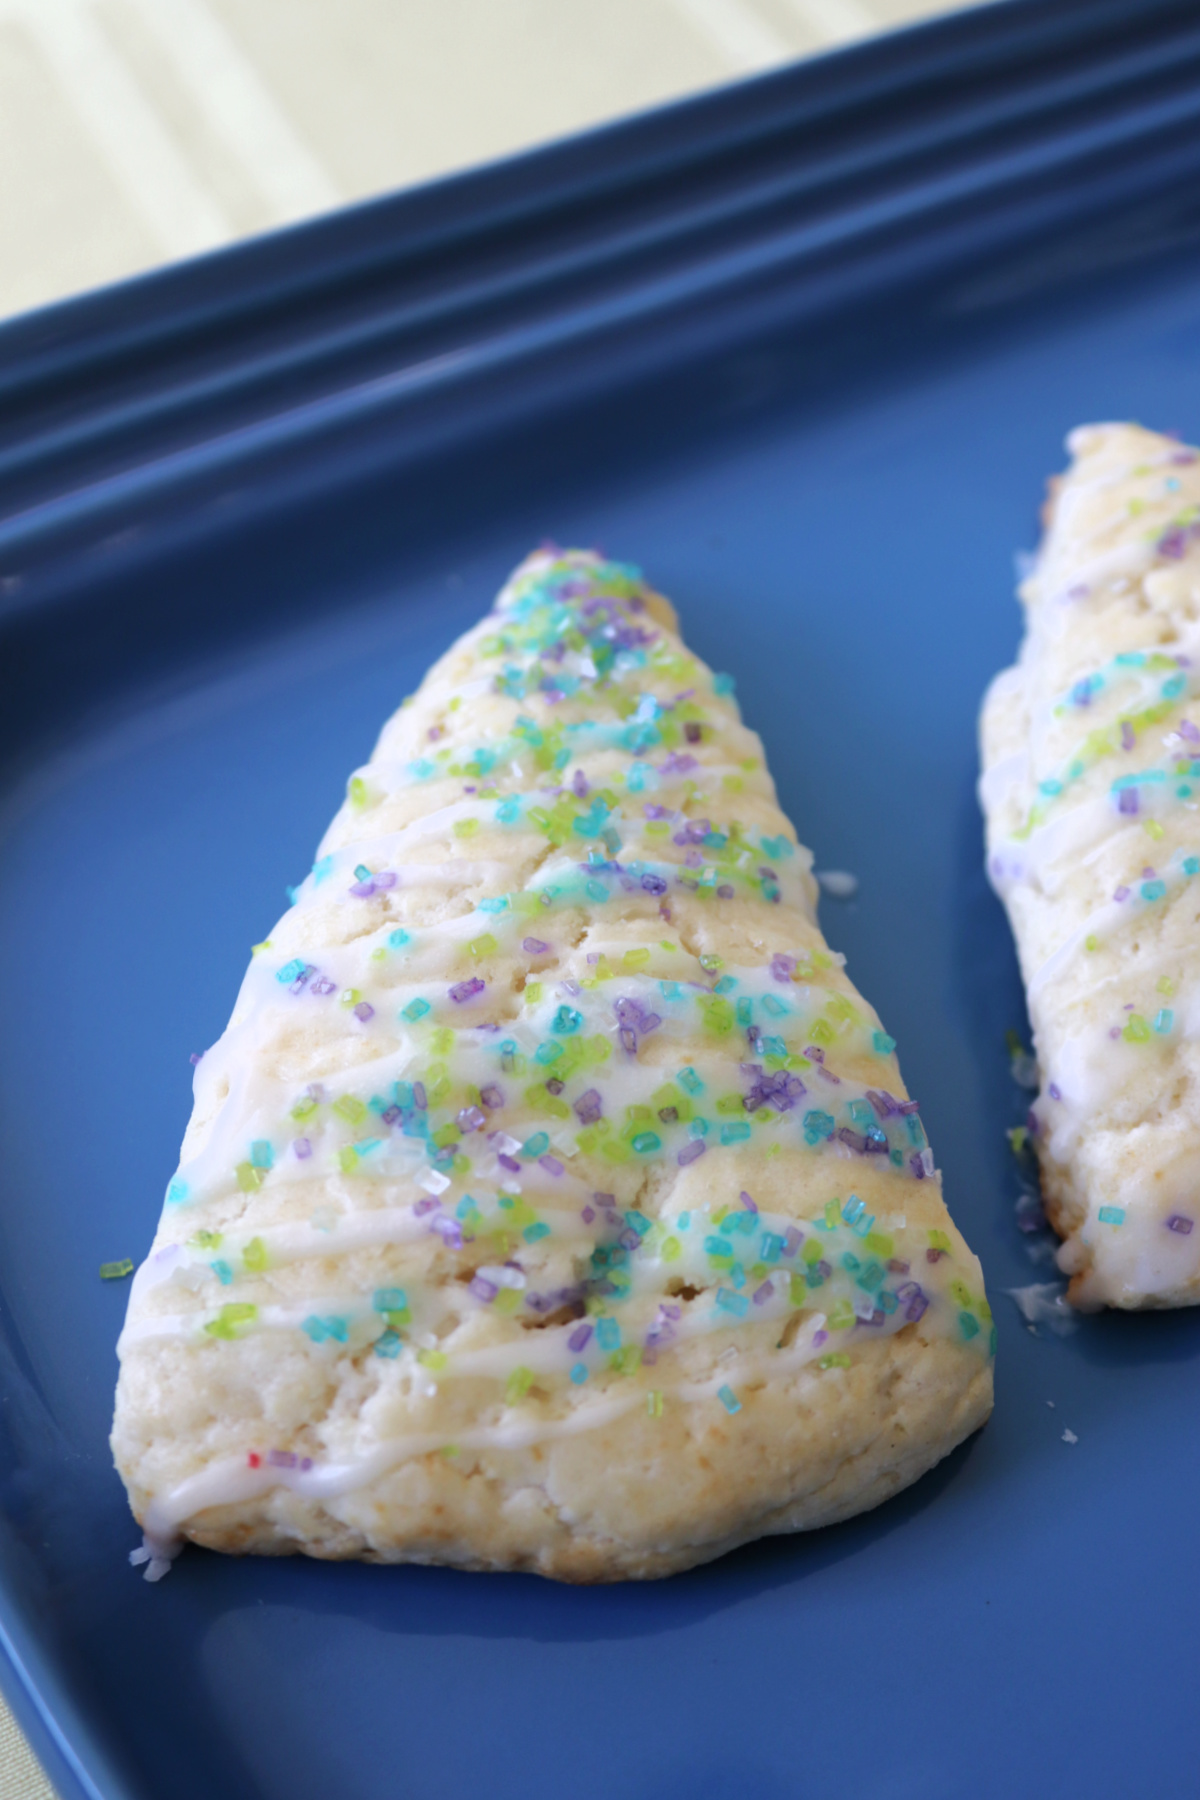 Lemon scones with lavender glaze and colored sugar on a blue platter.